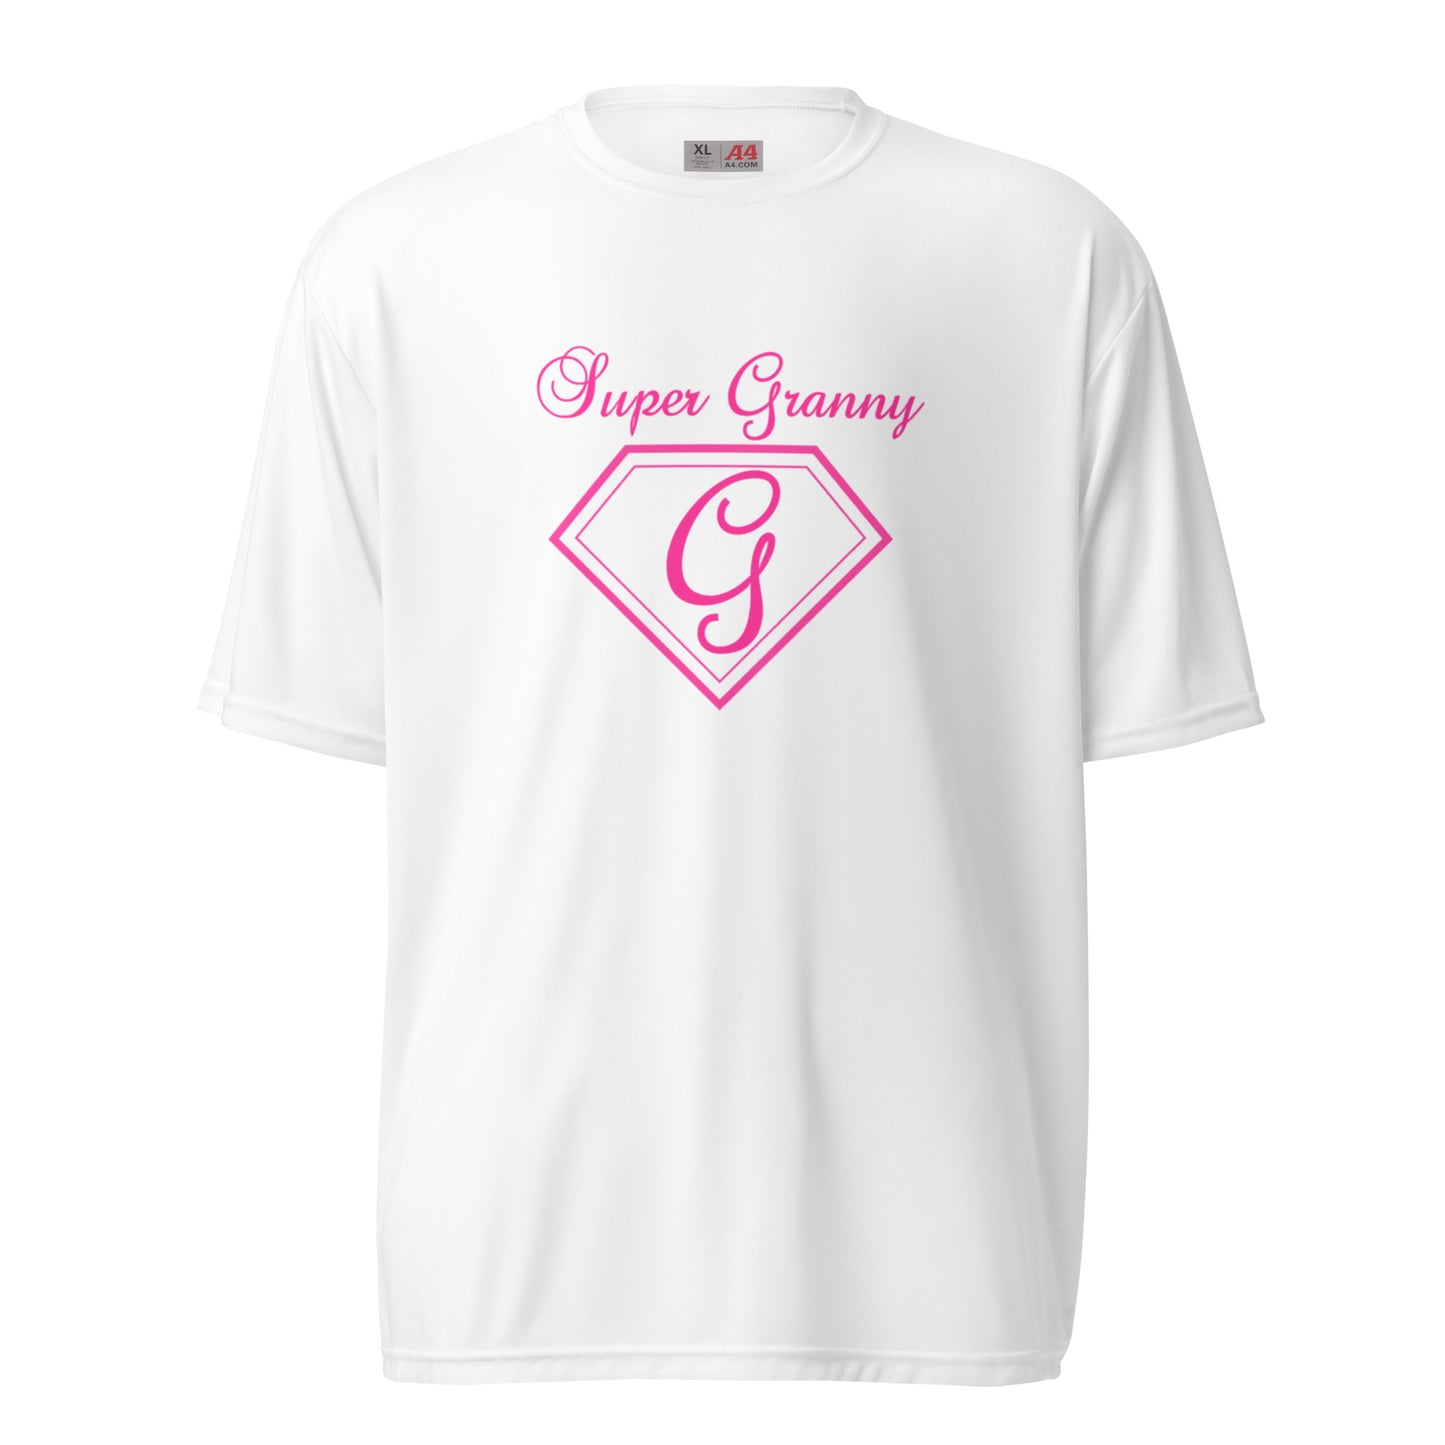 Super Granny unisex performance crew neck t-shirt - Pink Print